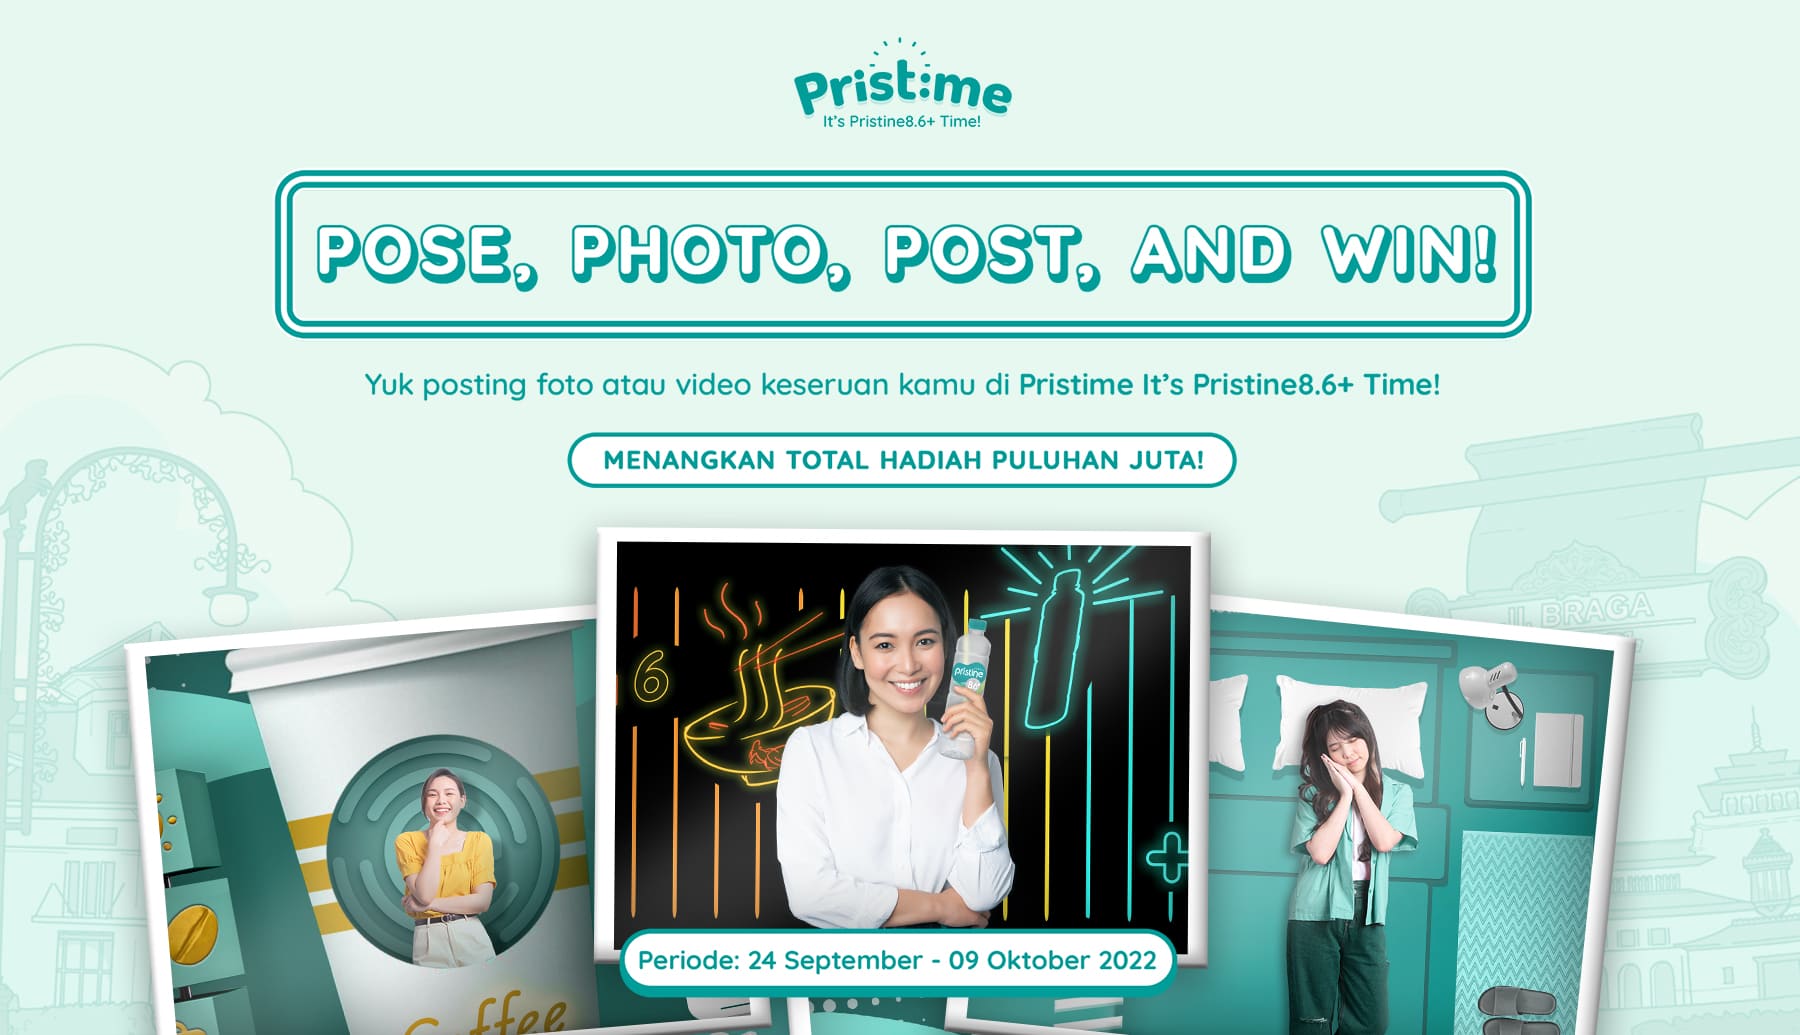 #Pristime Pose, Photo, Post & Win Competition